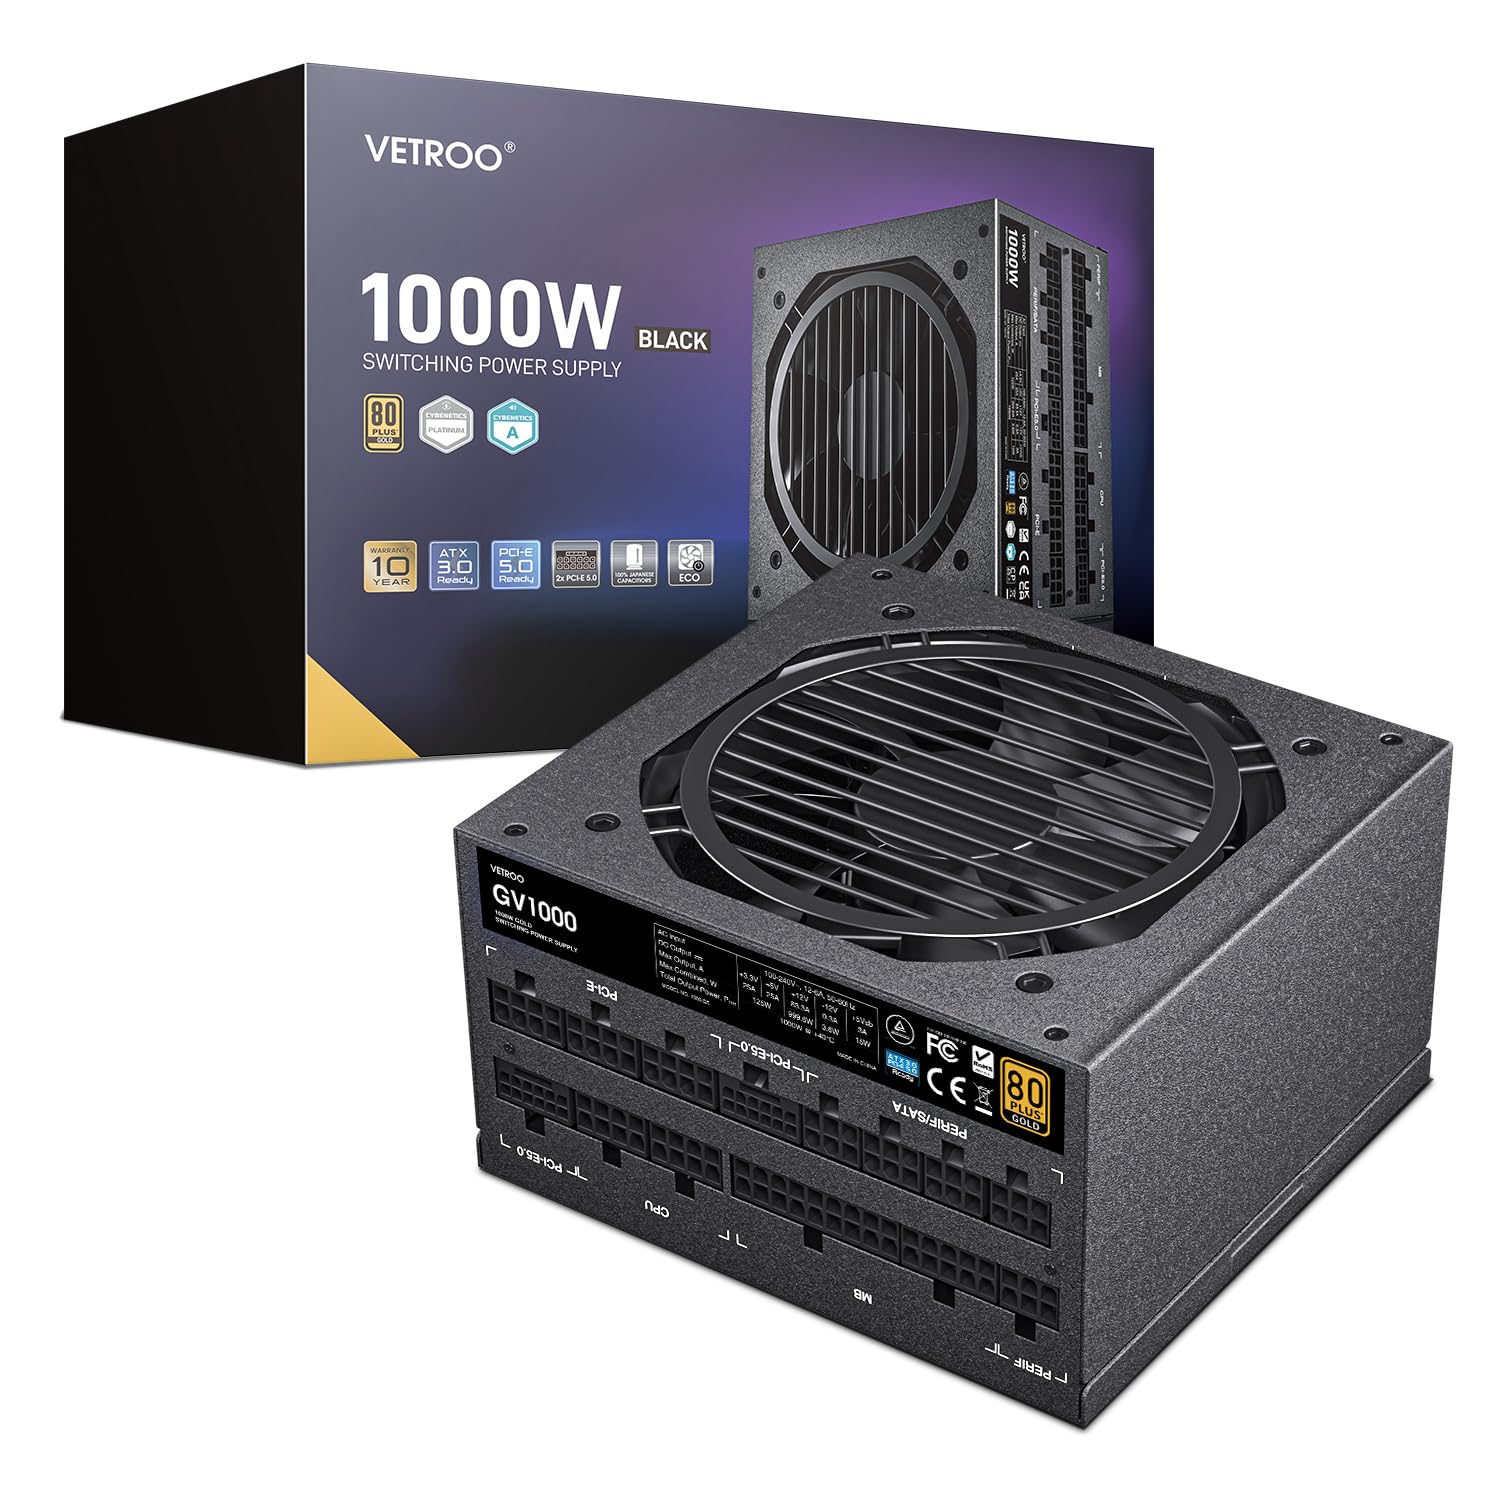 1000W Vetroo GV1000 80+ Gold ATX 3.0 Fully Modular Desktop Power Supply $120 + Free Shipping